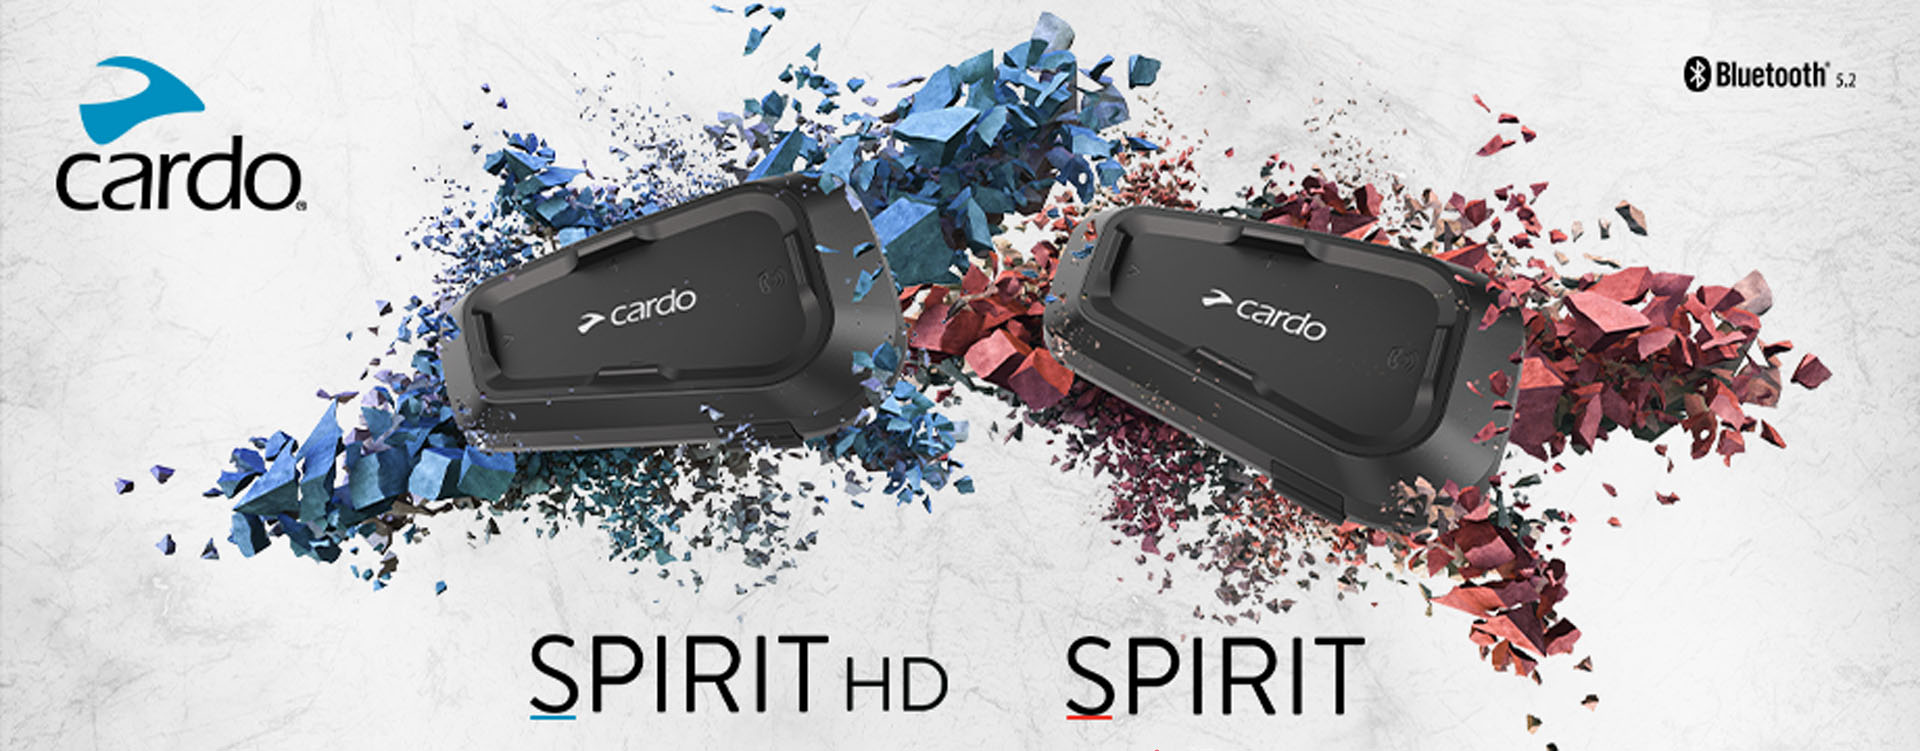 Cardo Spirit和Spirit HD。照片由自行车评论提供。